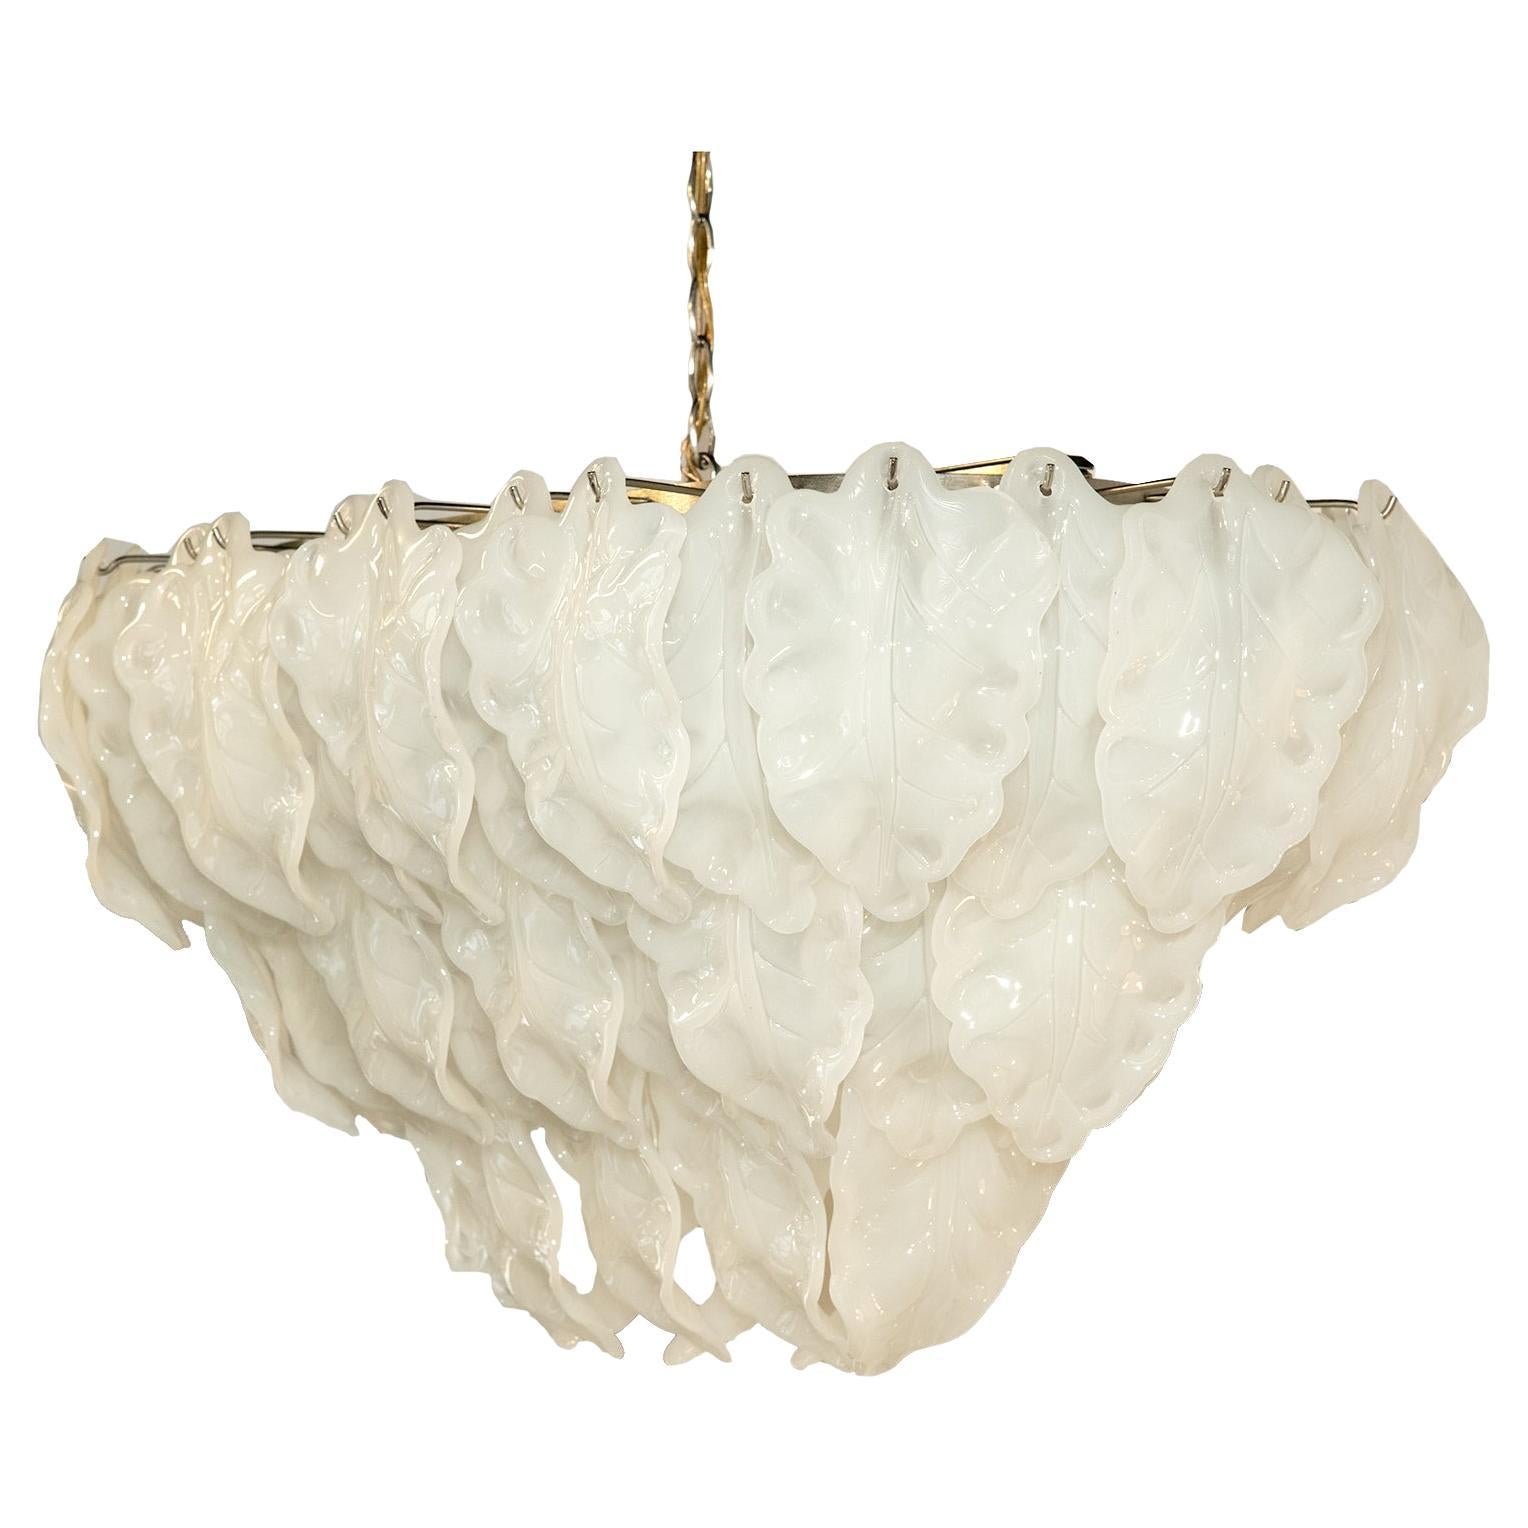 Grand pendentif en verre Murano à feuilles blanches